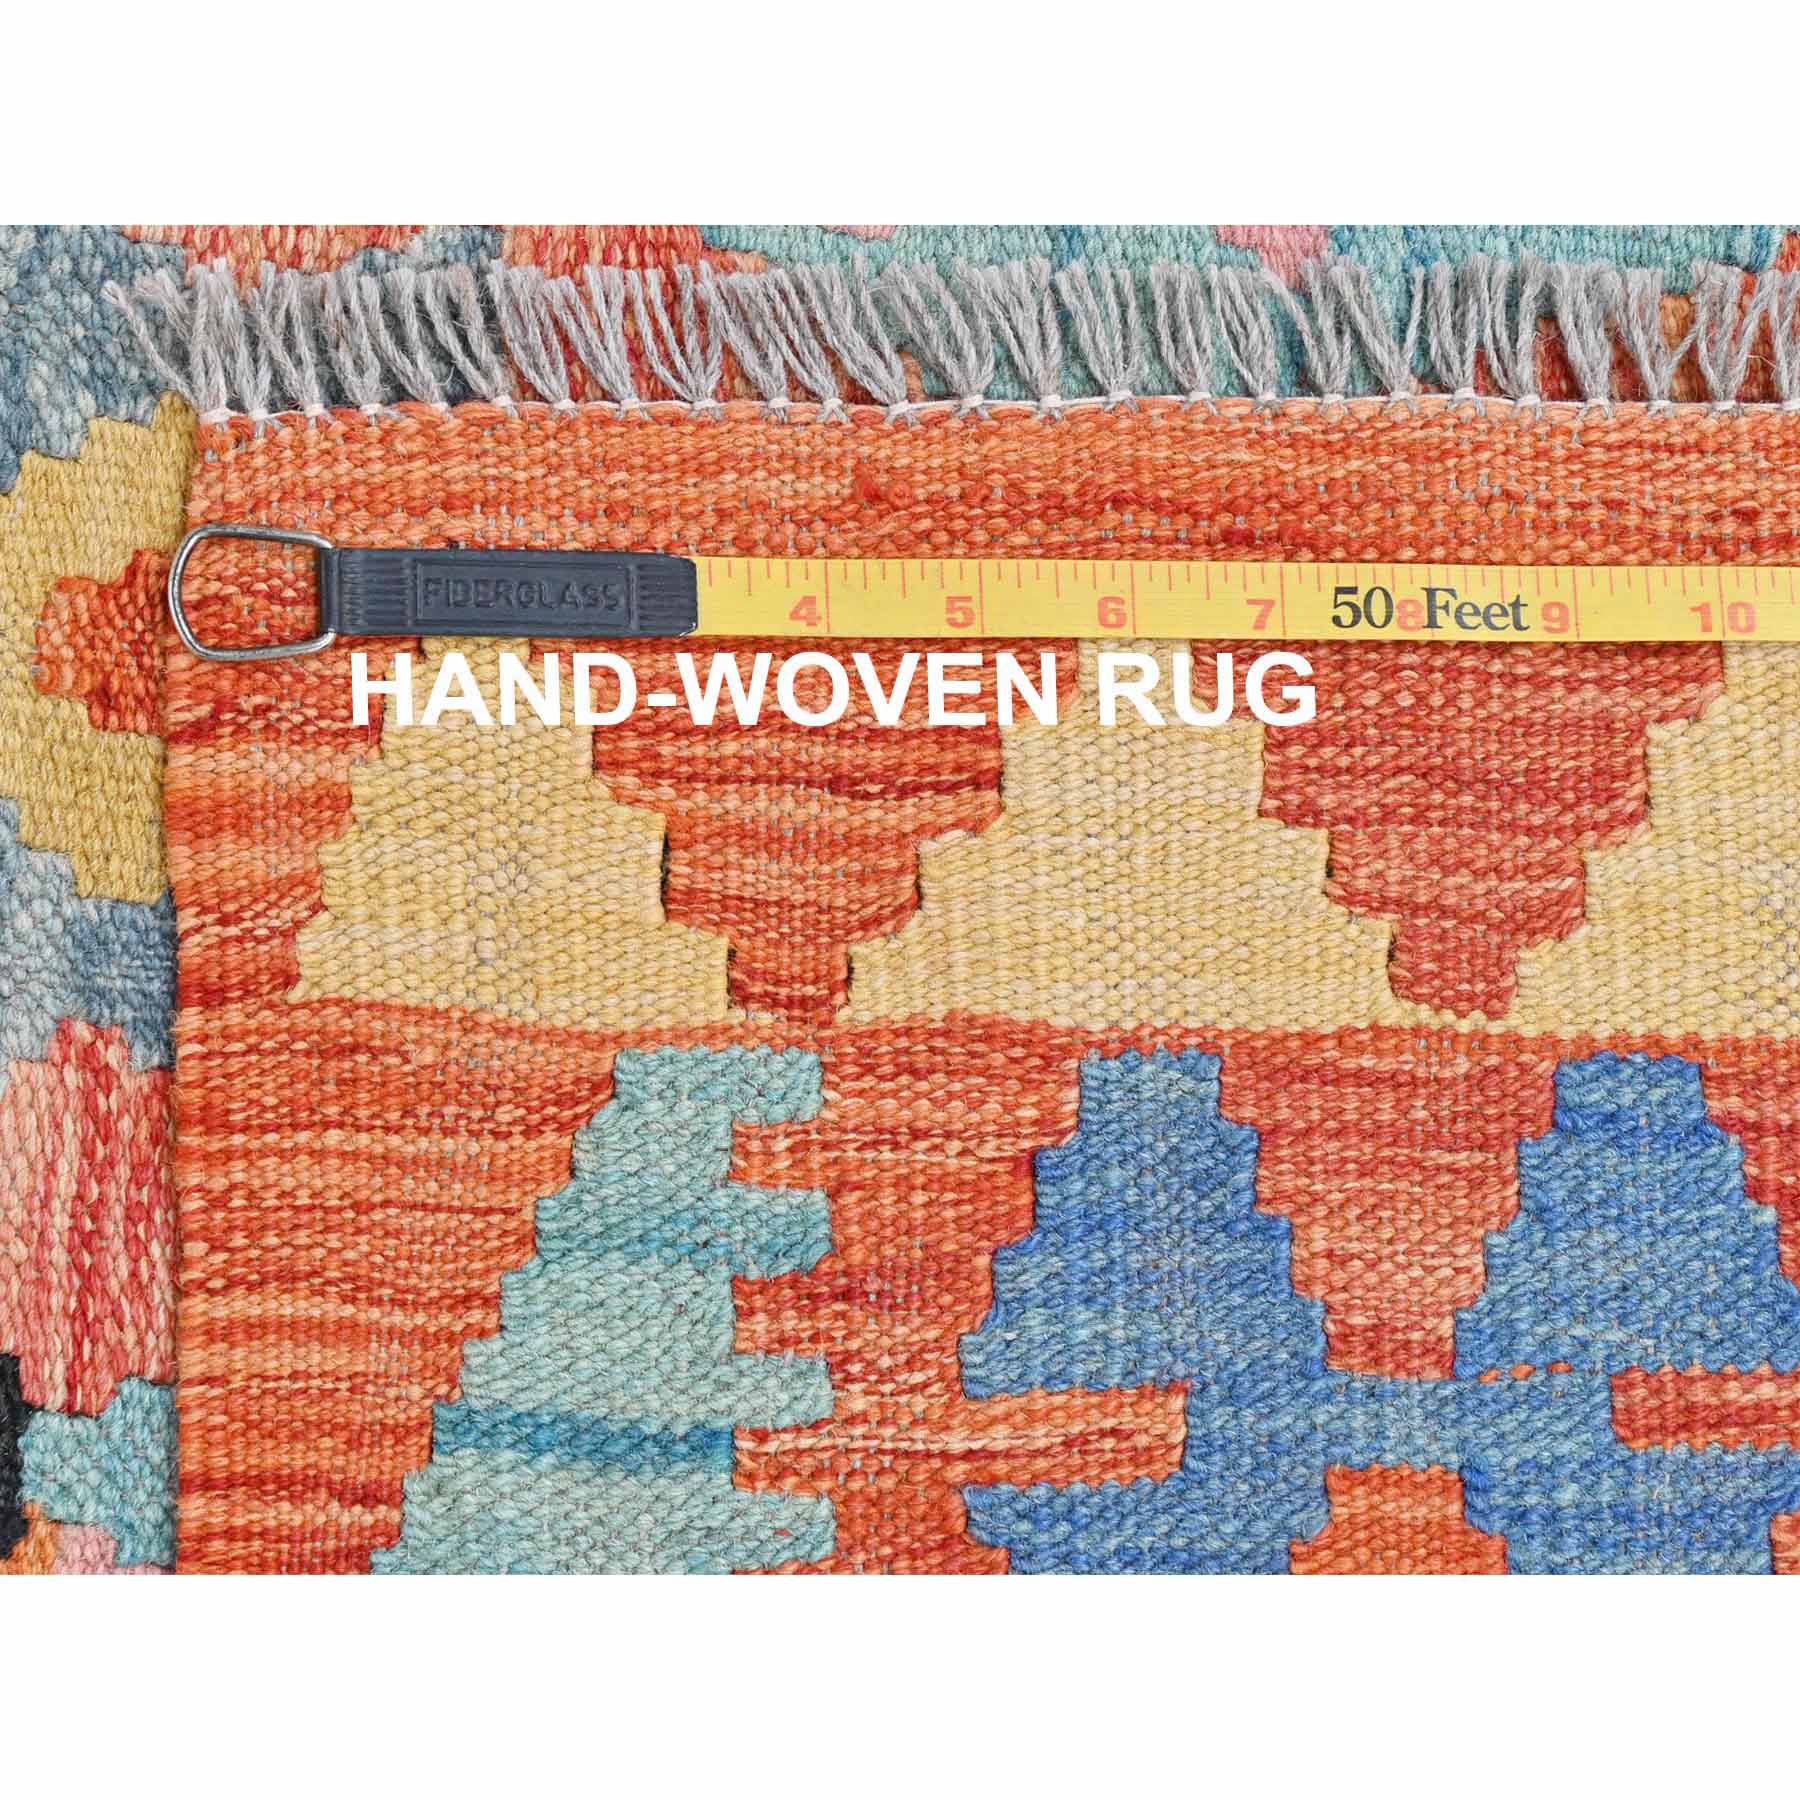 Flat-Weave-Hand-Woven-Rug-409115